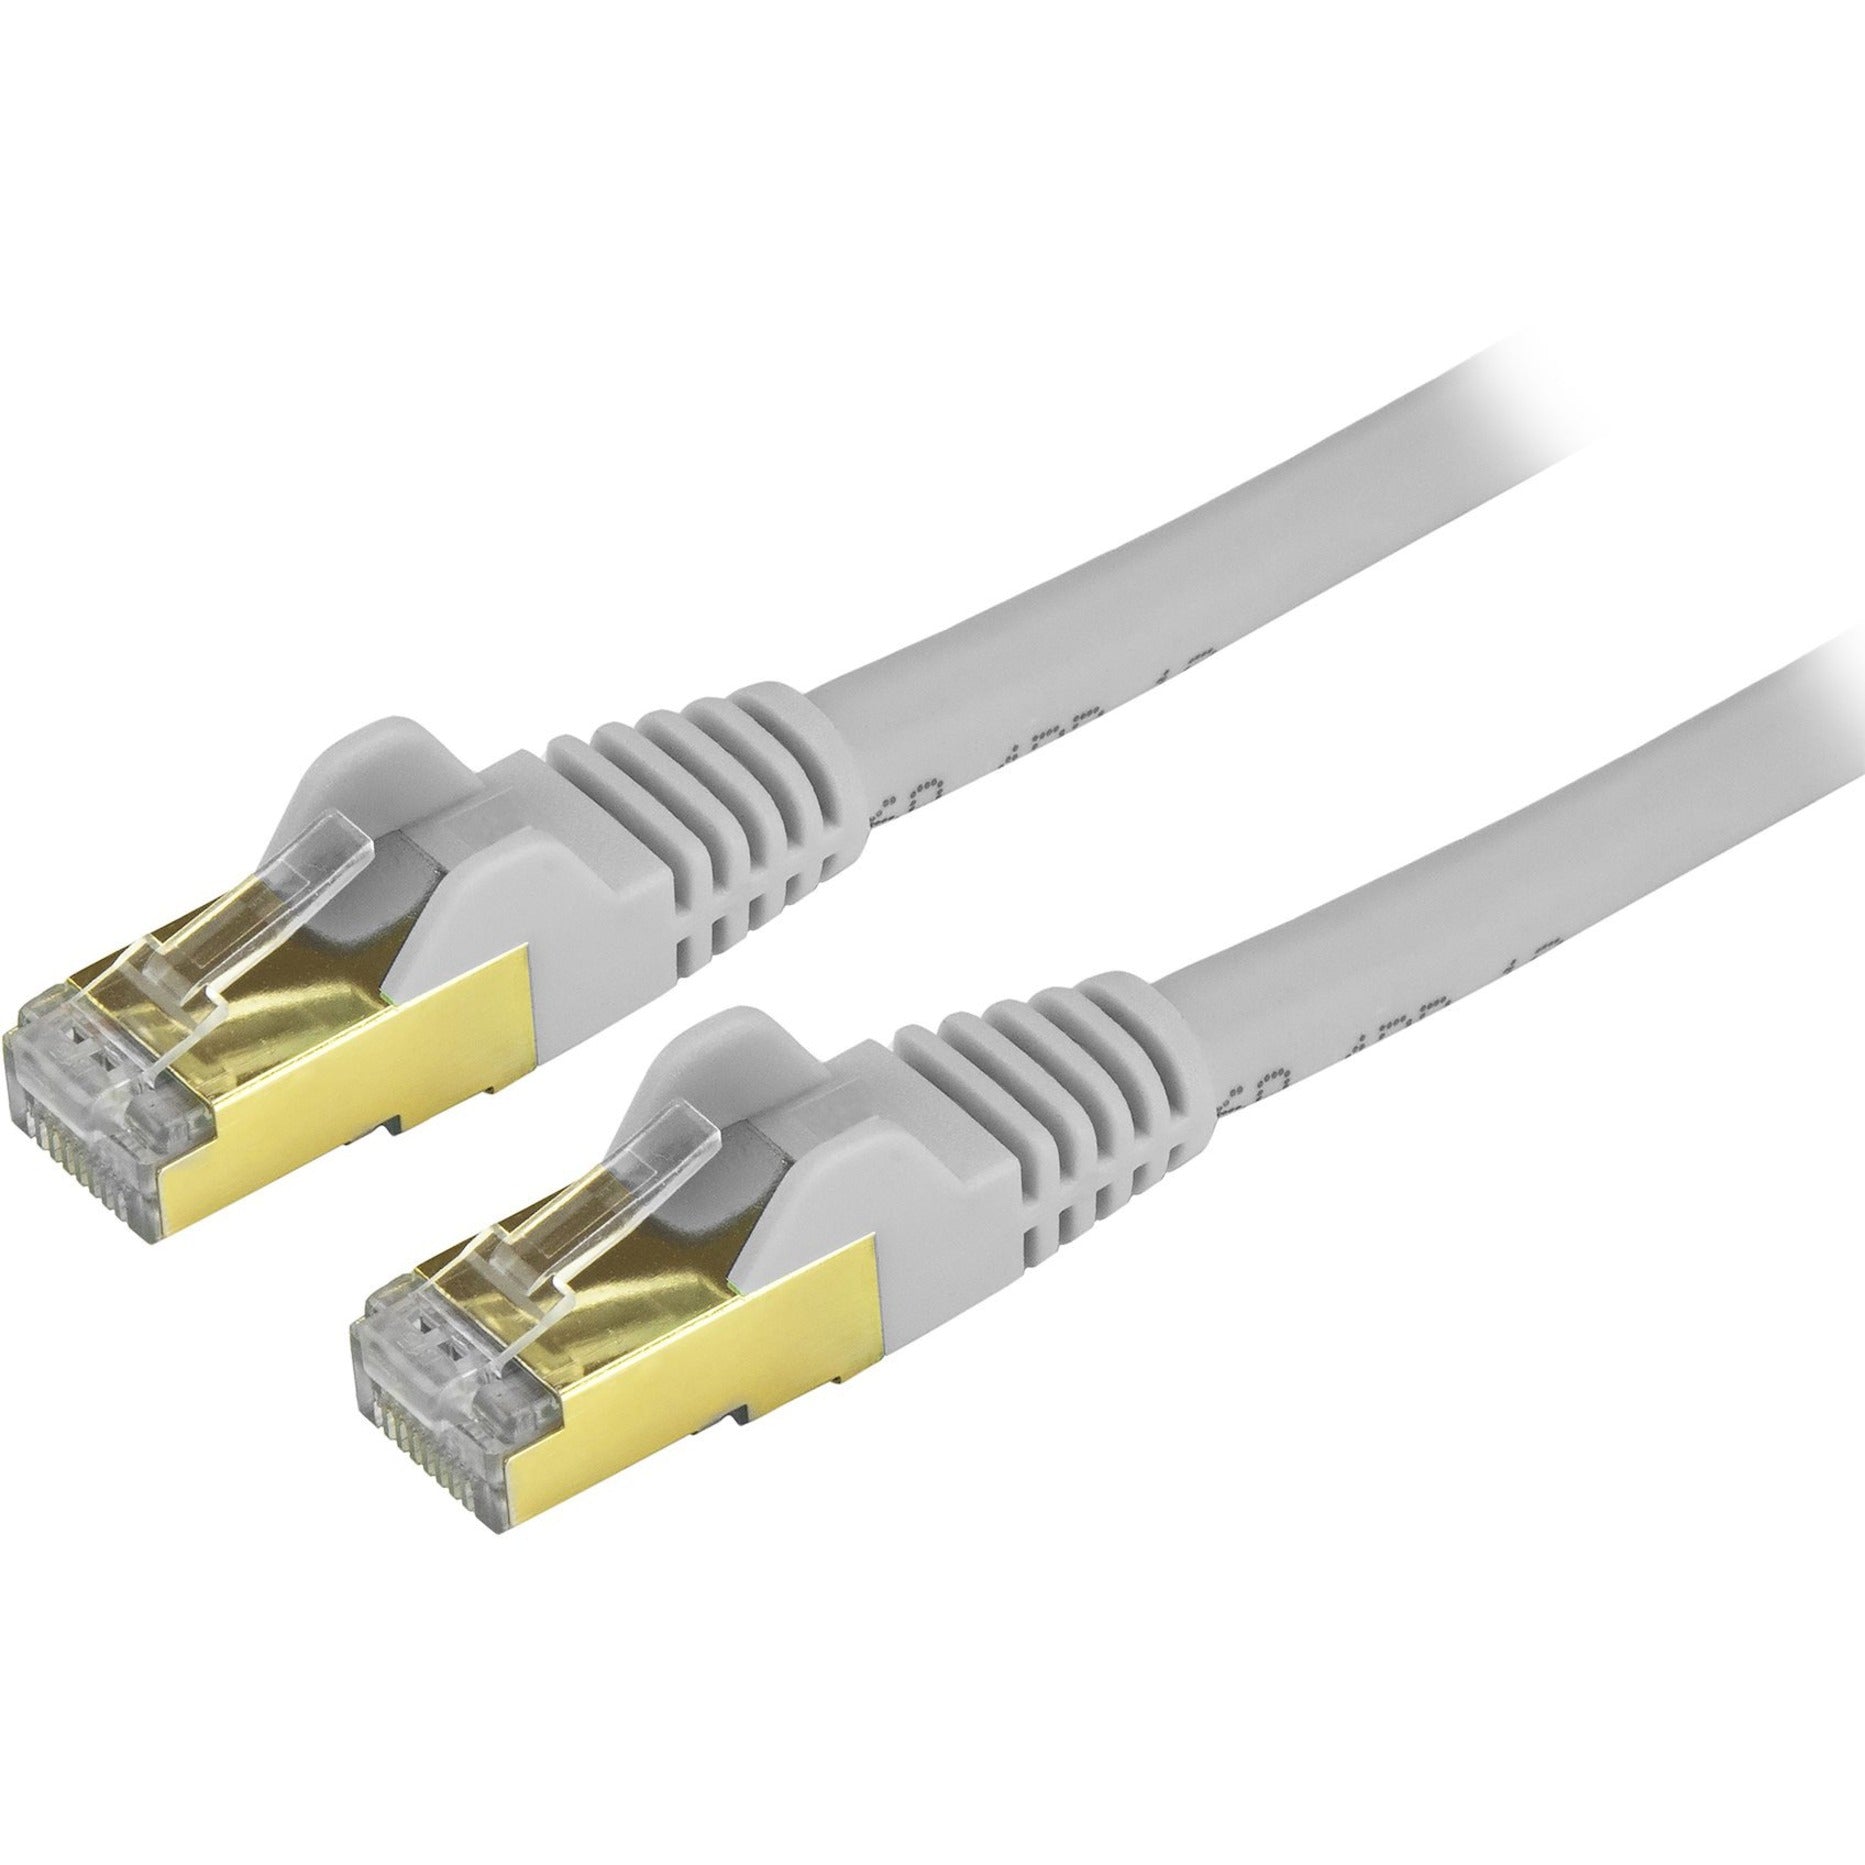 StarTech.com C6ASPAT6INGR Cat6a Ethernet Patch Cable - Shielded (STP) - 6 in. Gray Short Ethernet Cord